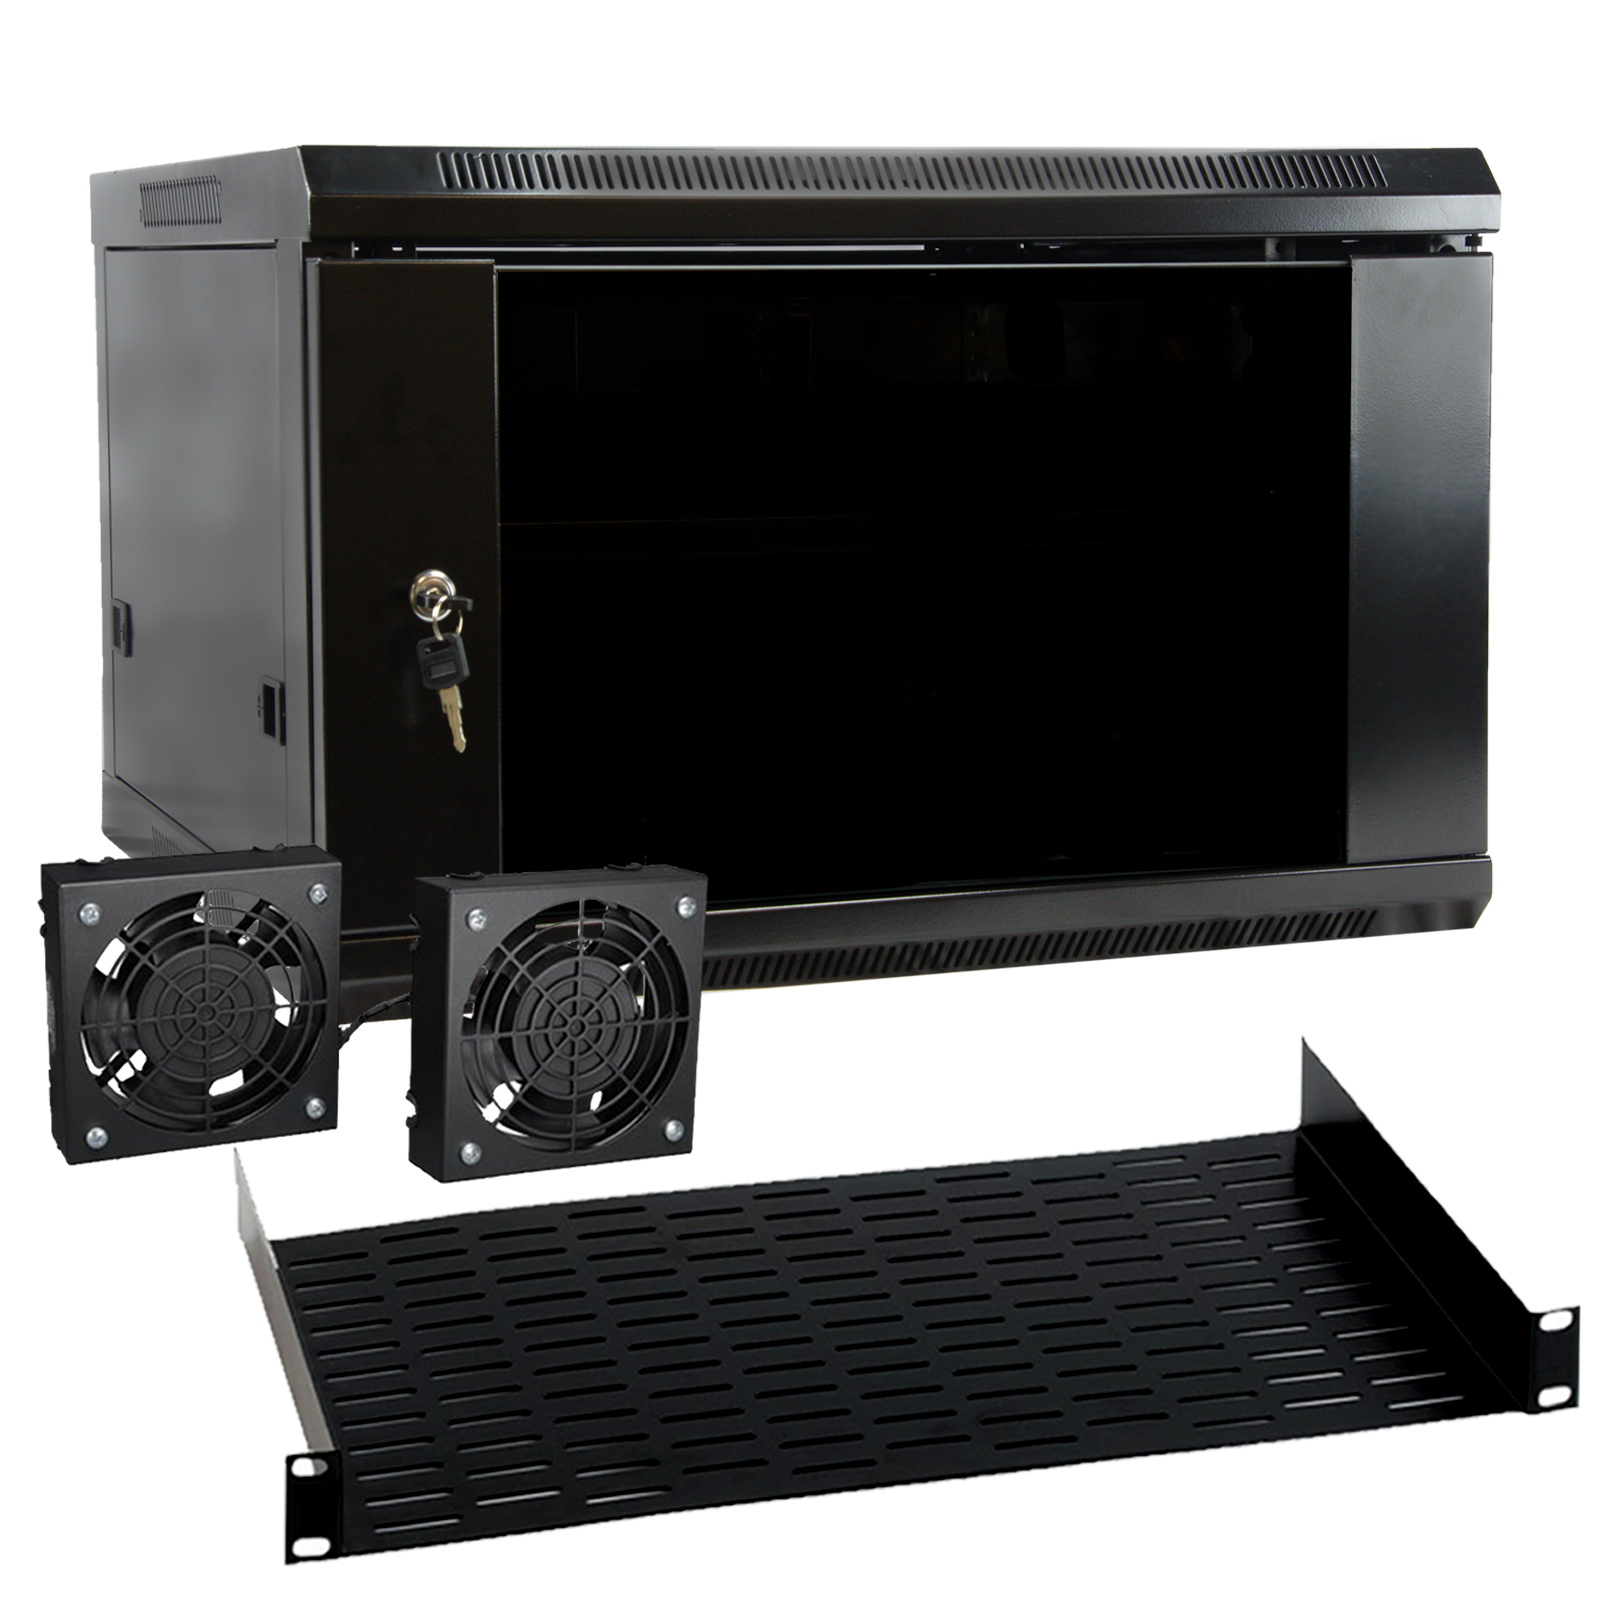 Megamounts 97095009M 6U Wall Mount Rack Enclosure Server Cabinet with Two Cooling Fans